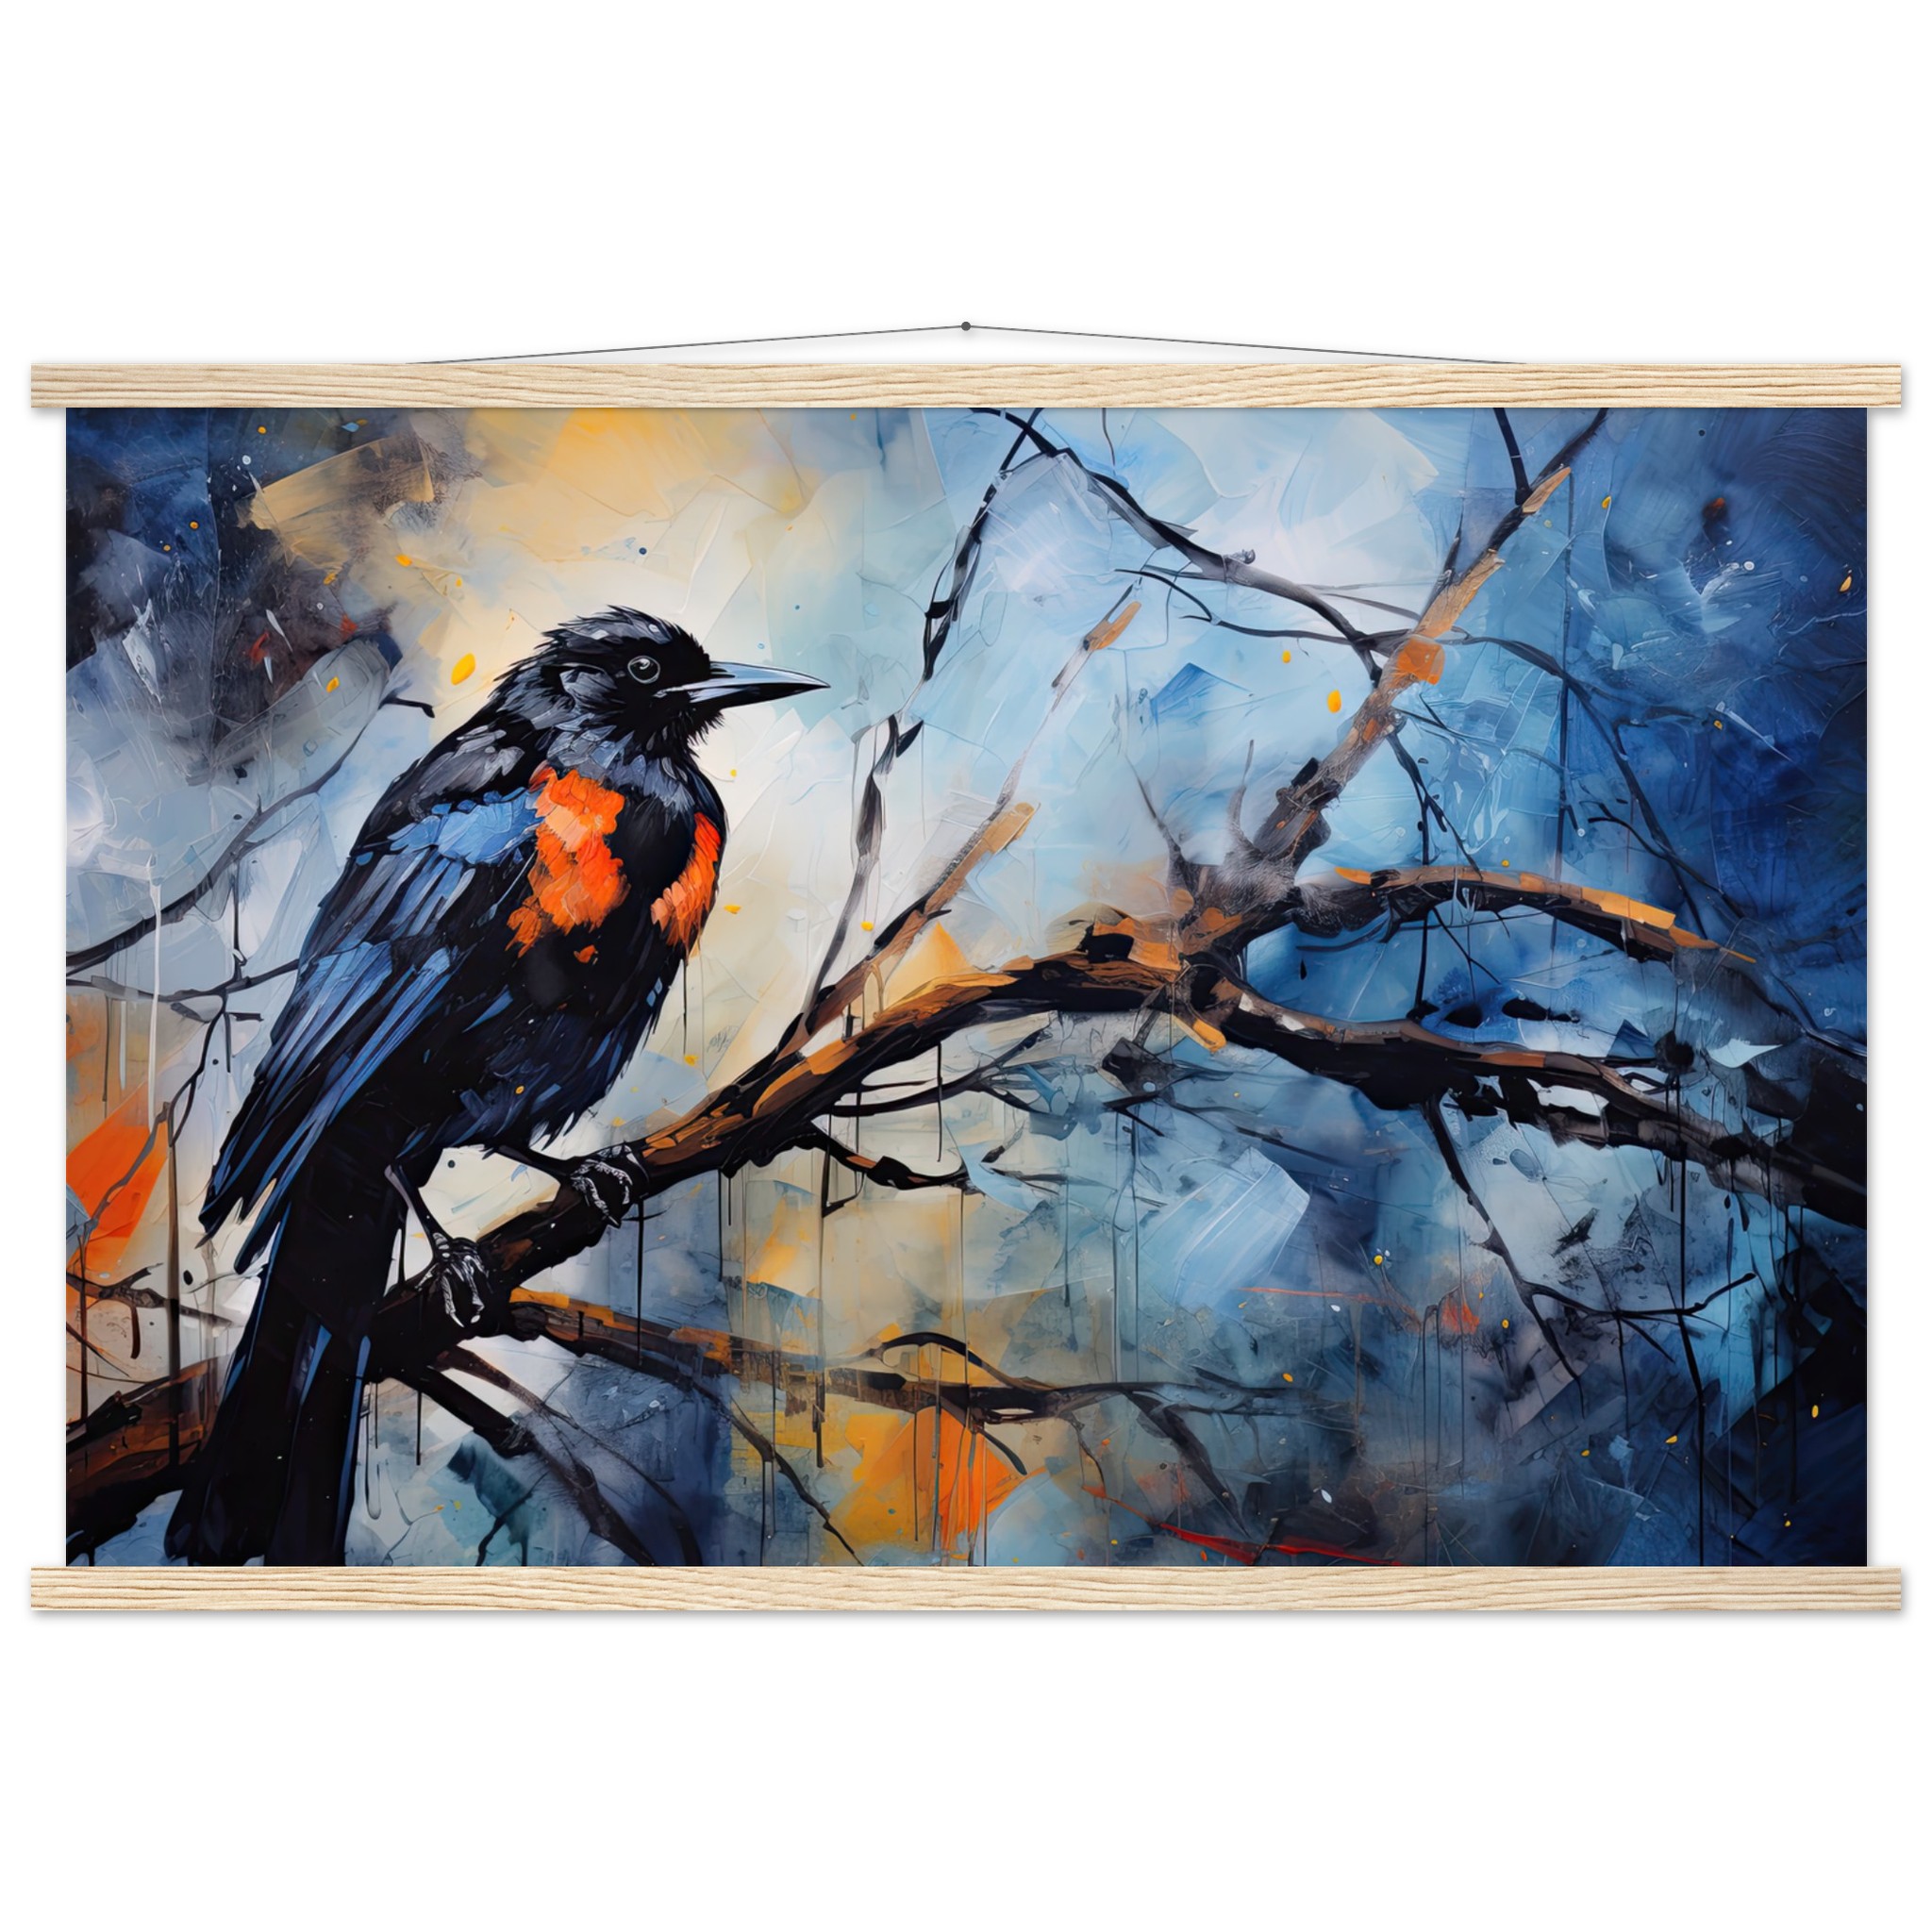 Bird Watercolor Painting Abstract Hanging Print – 60×90 cm / 24×36″, Natural wood wall hanger